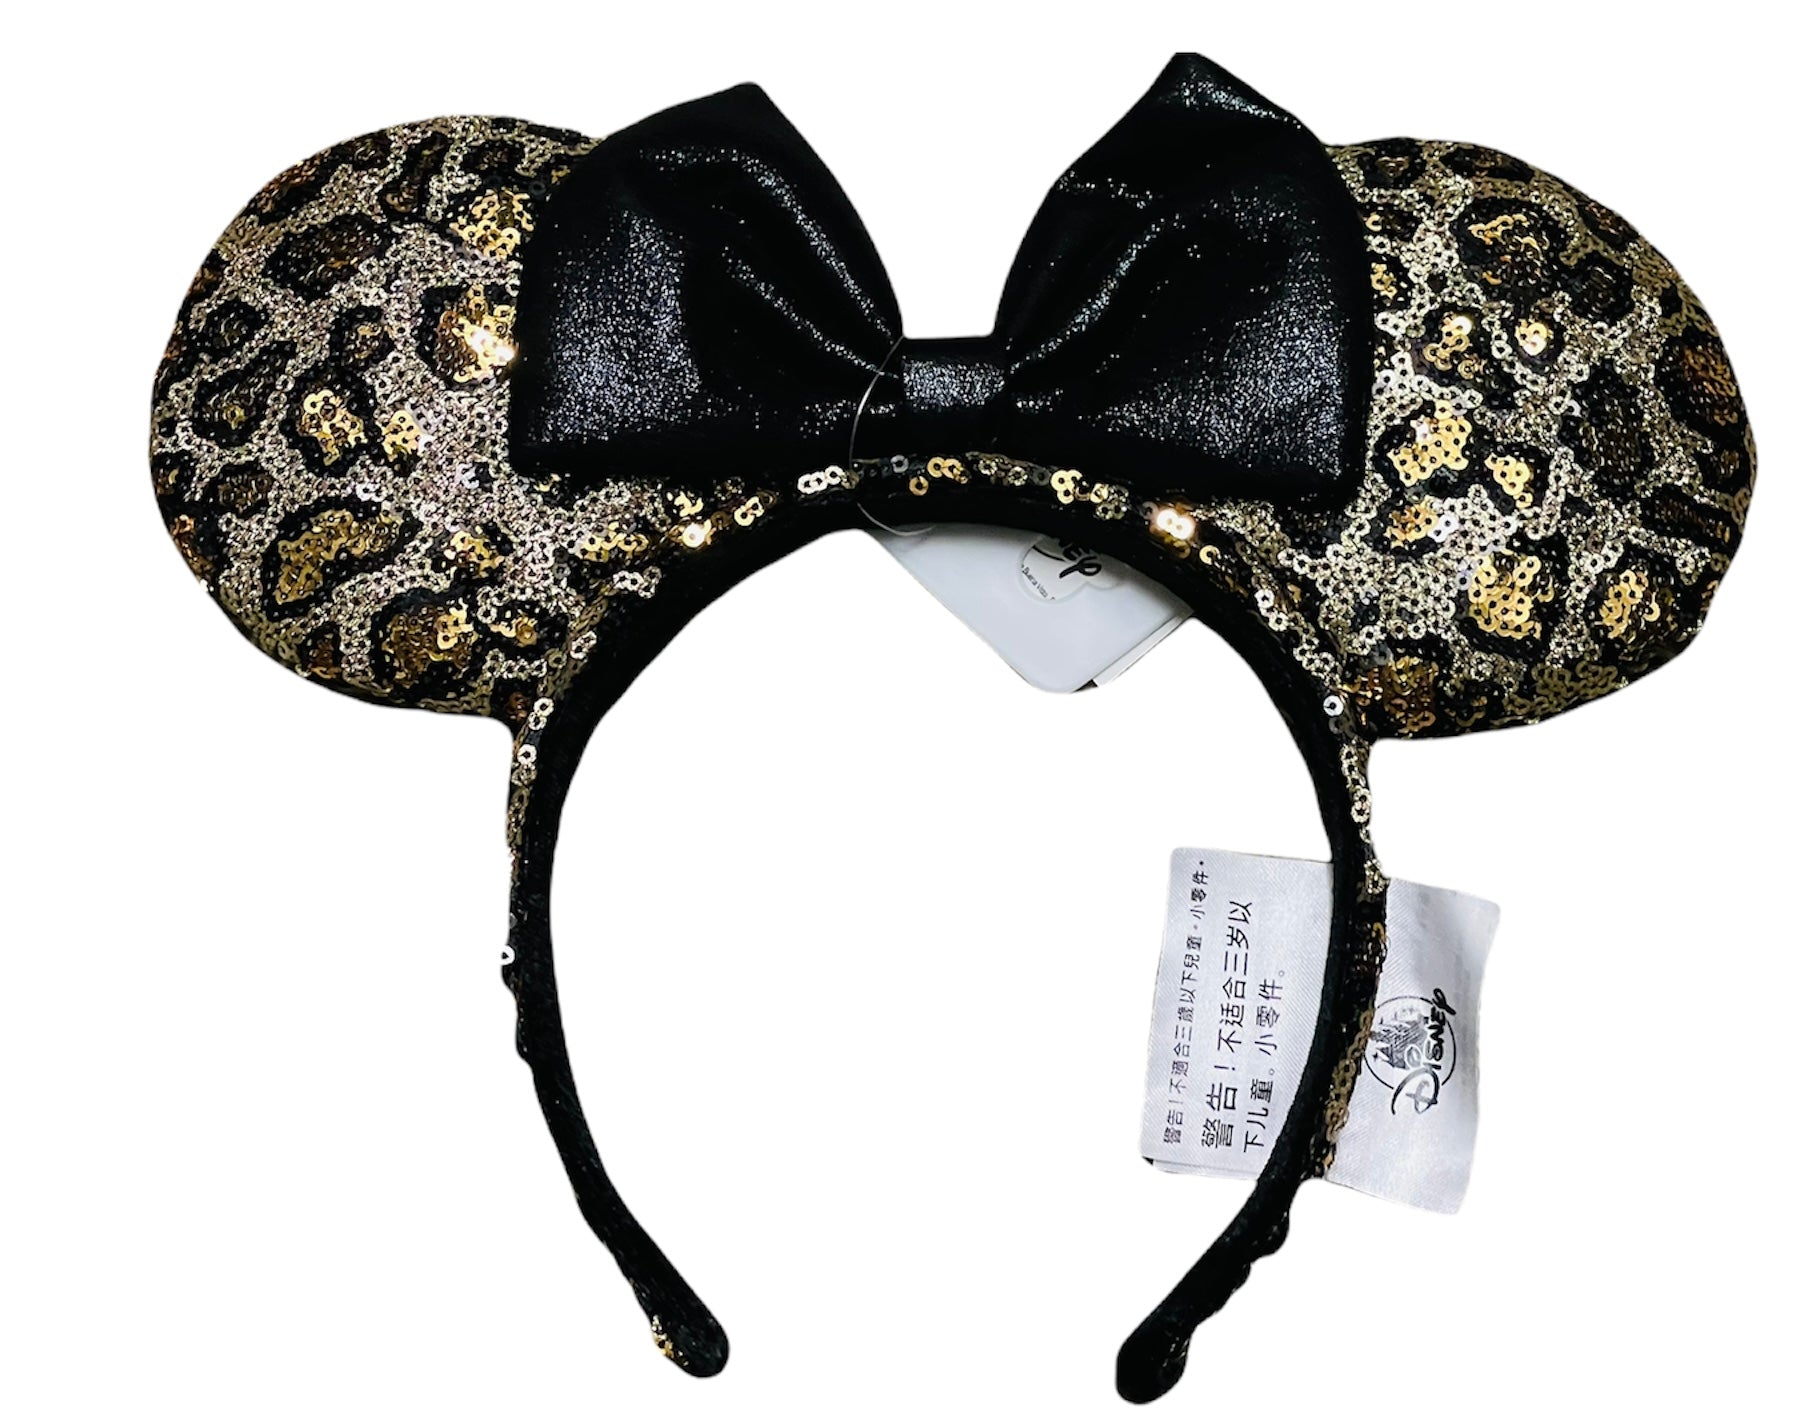 Disney Parks 2021 Animal Kingdom Leppard Print Minnie Ears Headband